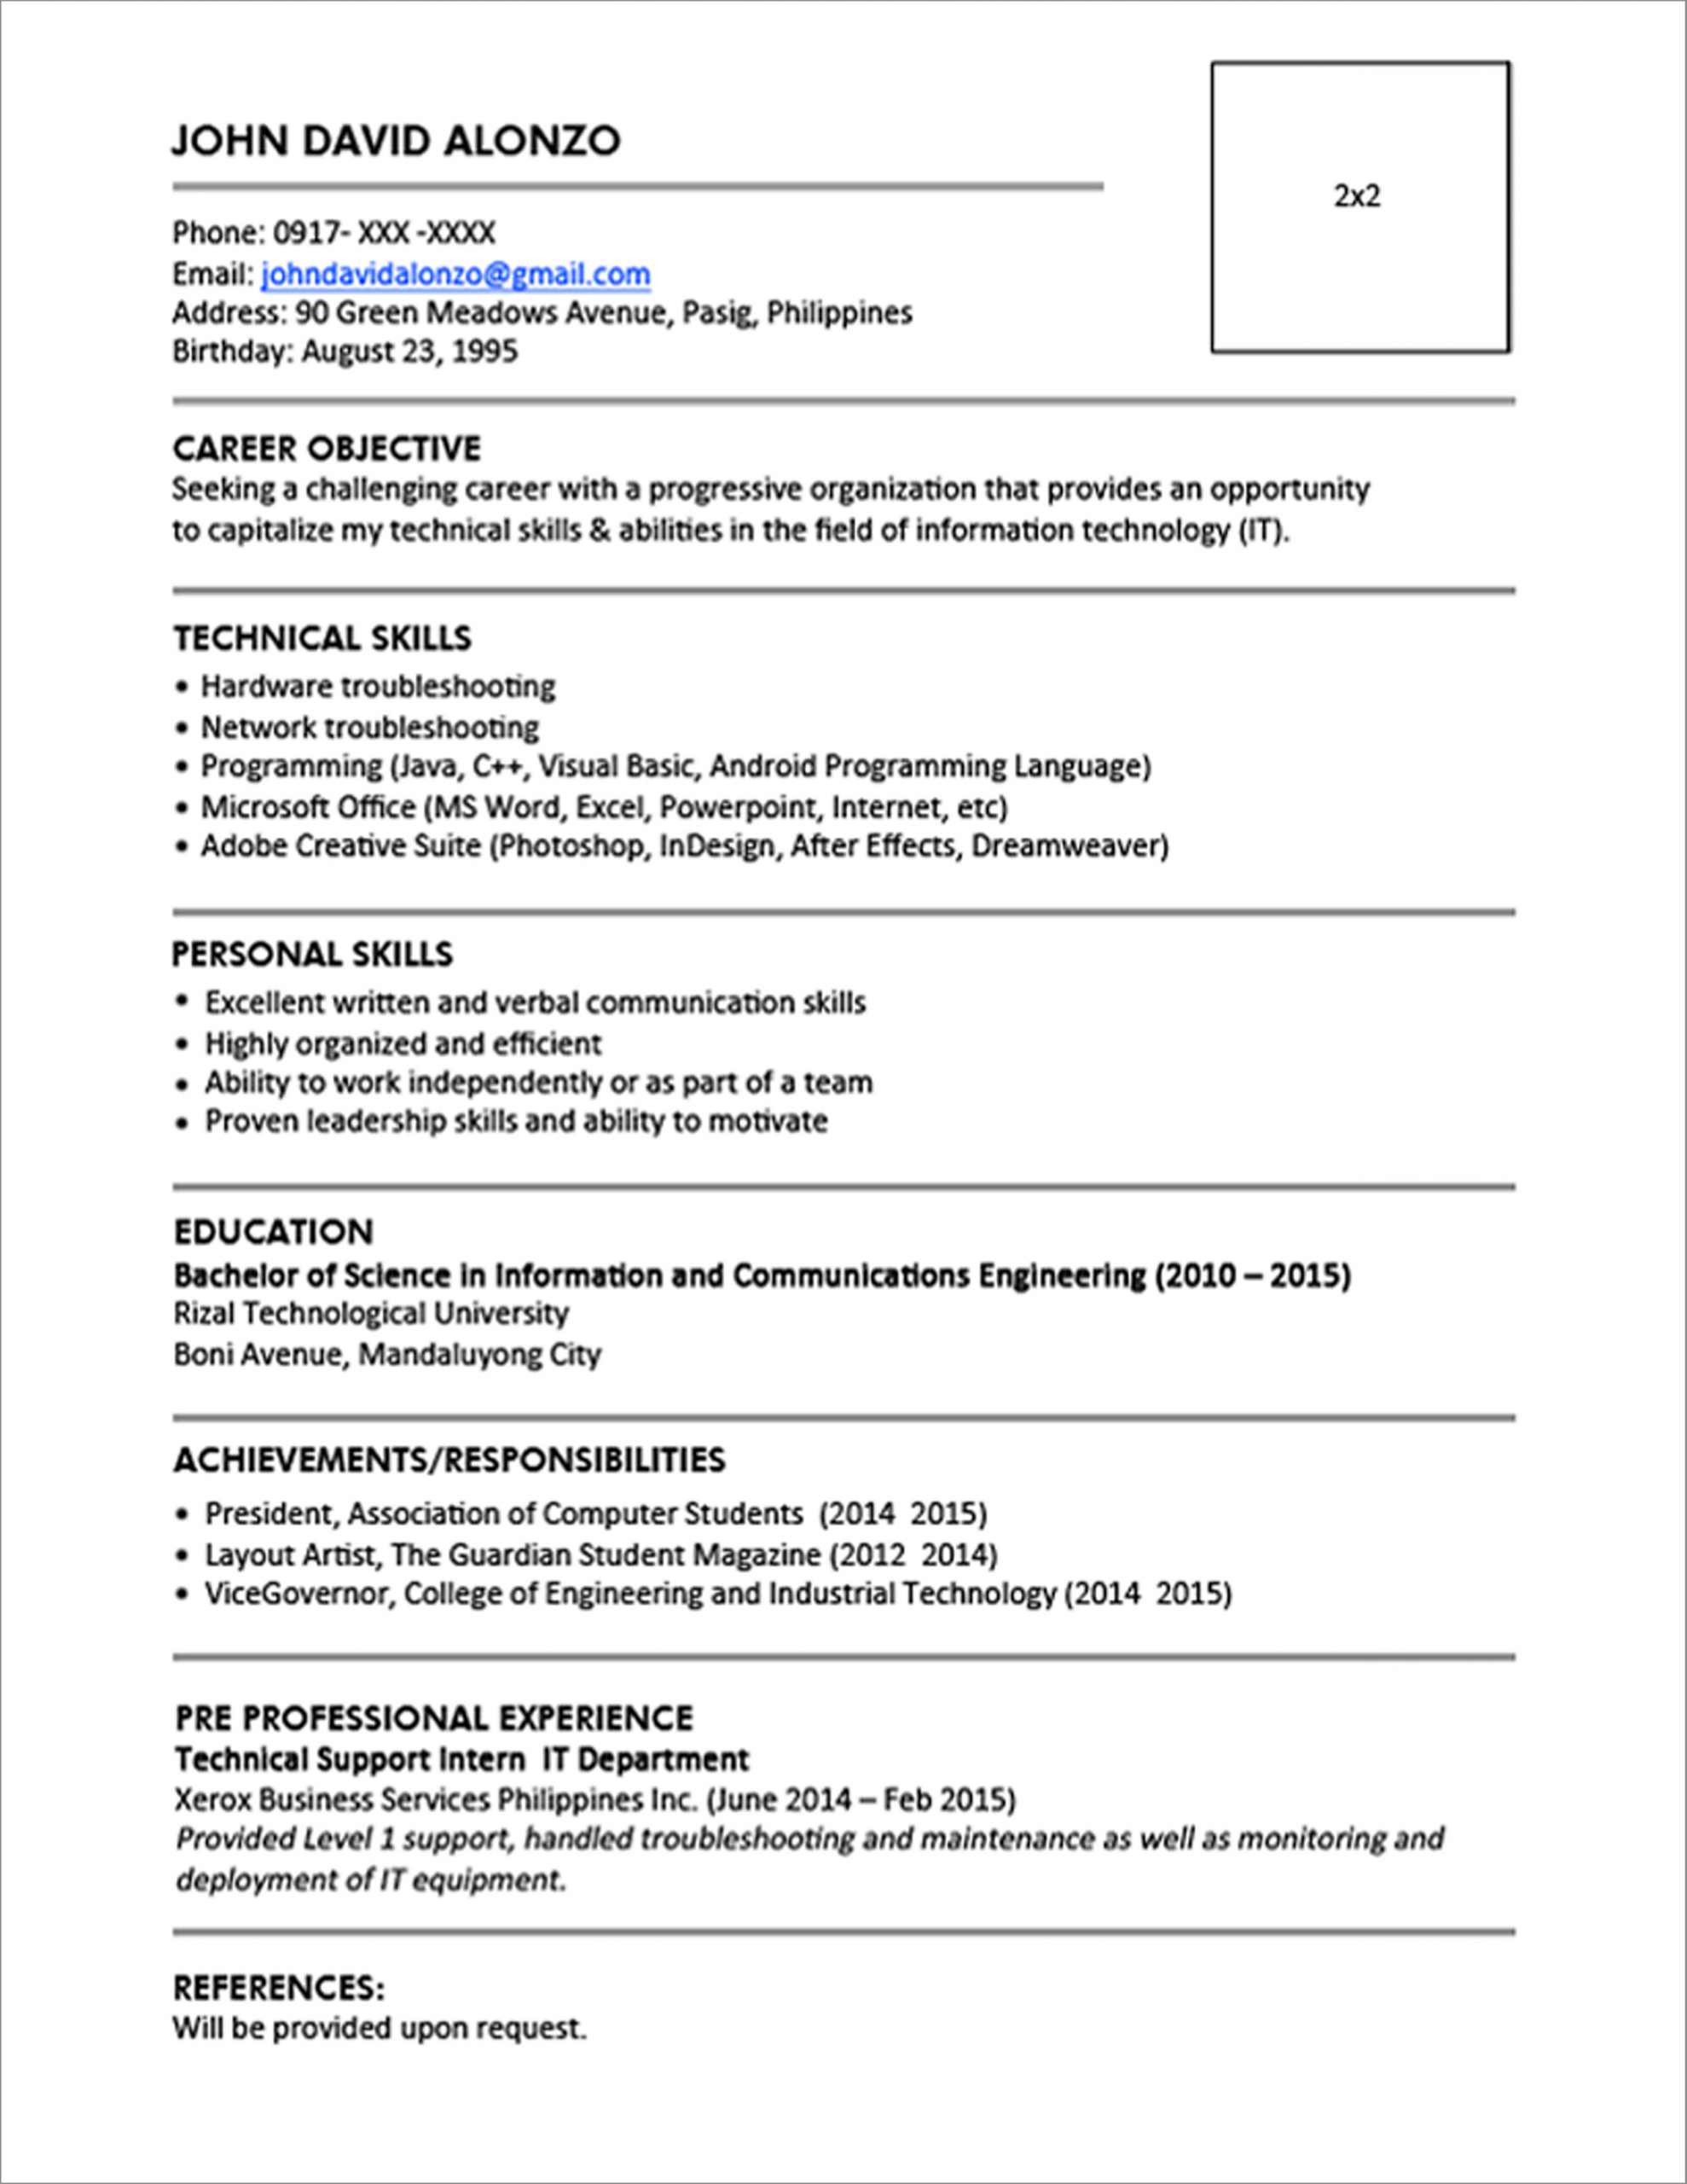 Simple Resume Sample for Fresh Graduate Sample Resume format for Fresh Graduates E Page format